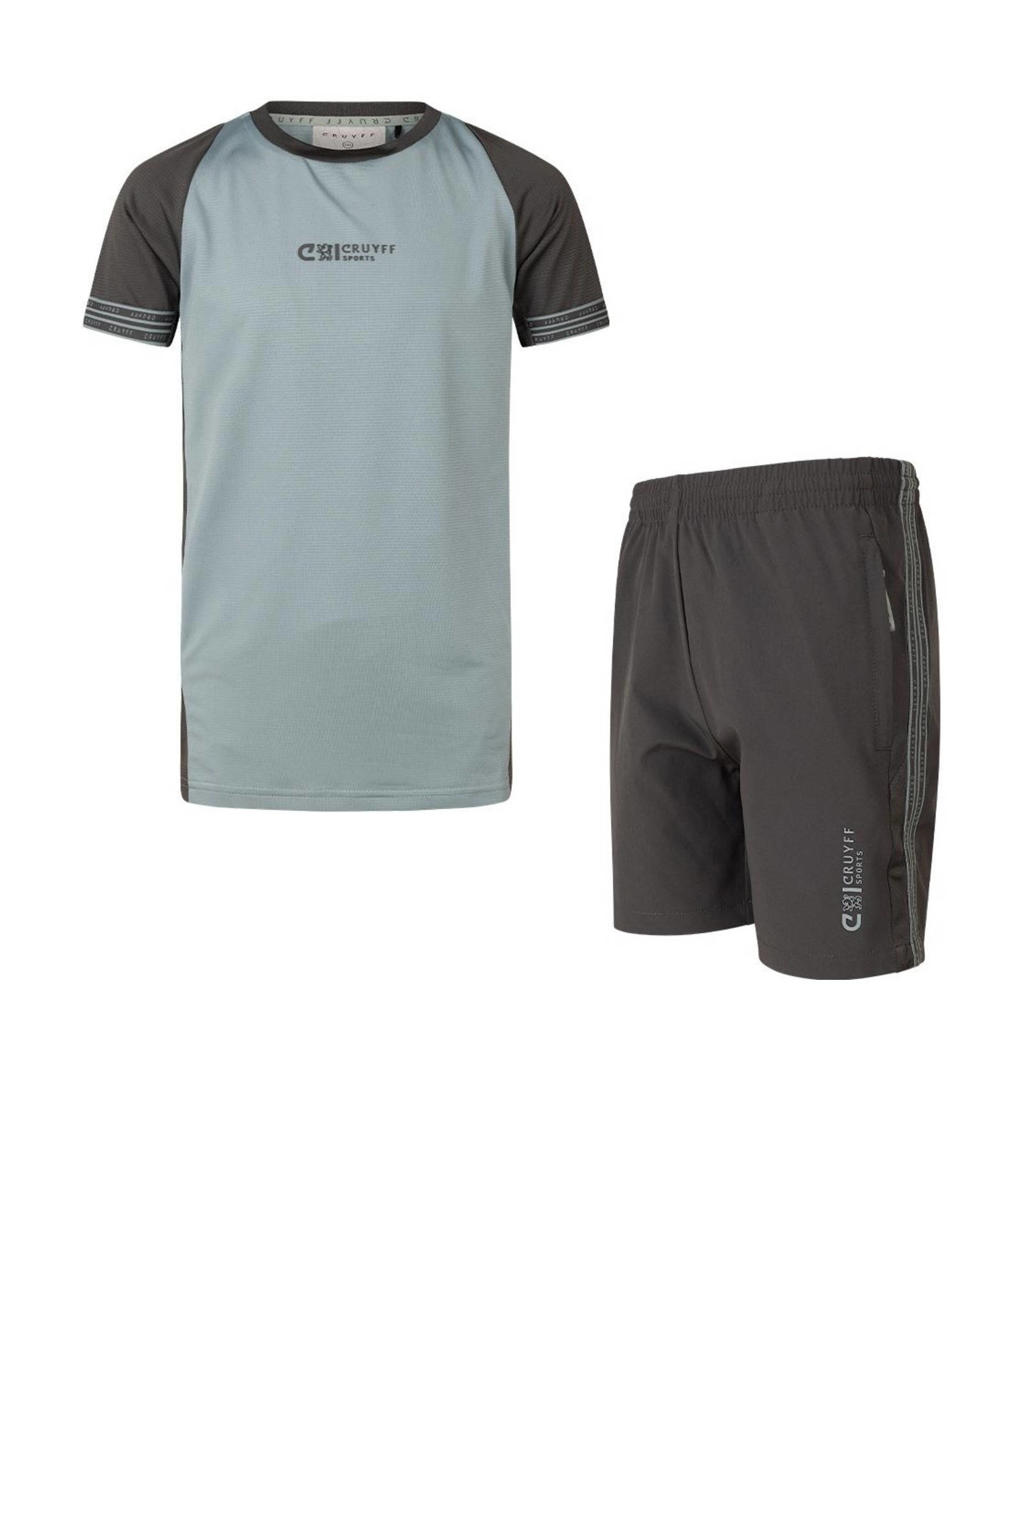 Cruyff T-shirt + short Hoof blauw/grijs